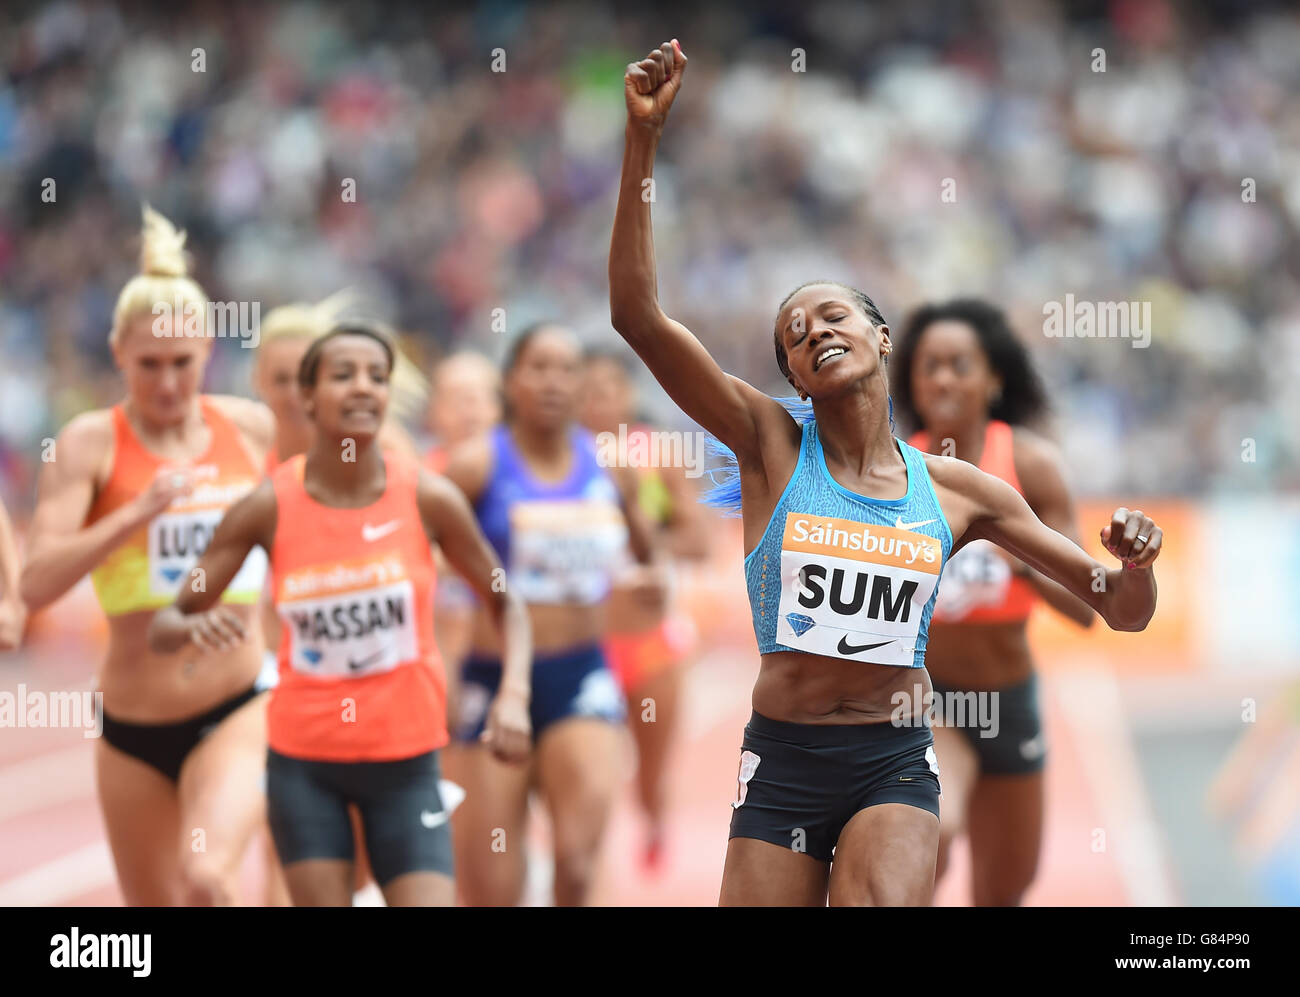 Kenya's Mercy Cherono Koech celebrates winning the Women's 5000m